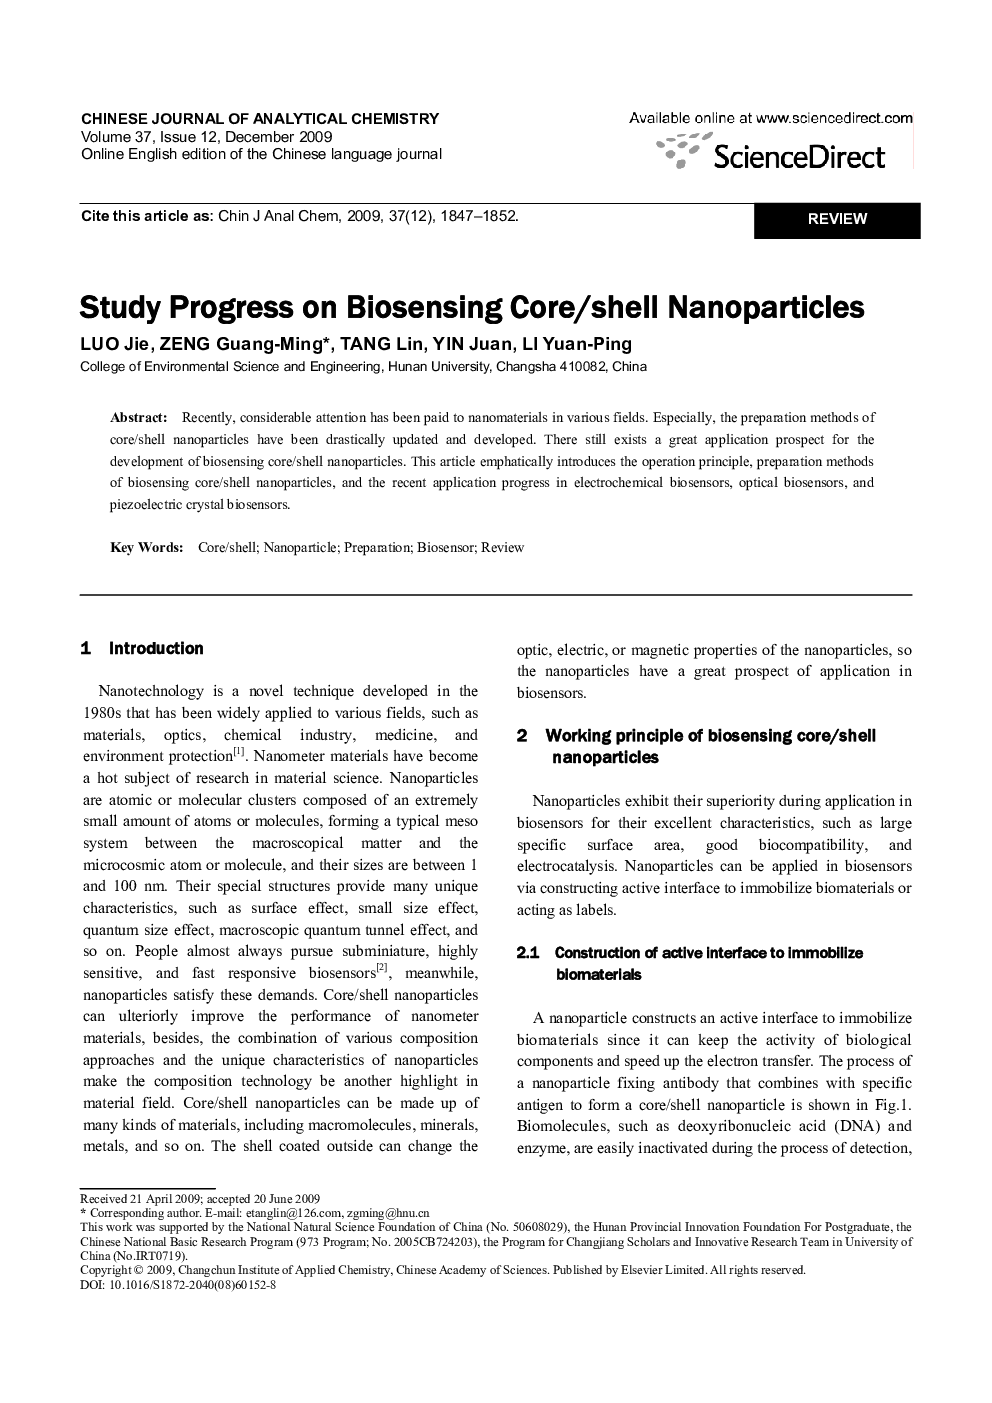 Study Progress on Biosensing Core/shell Nanoparticles 